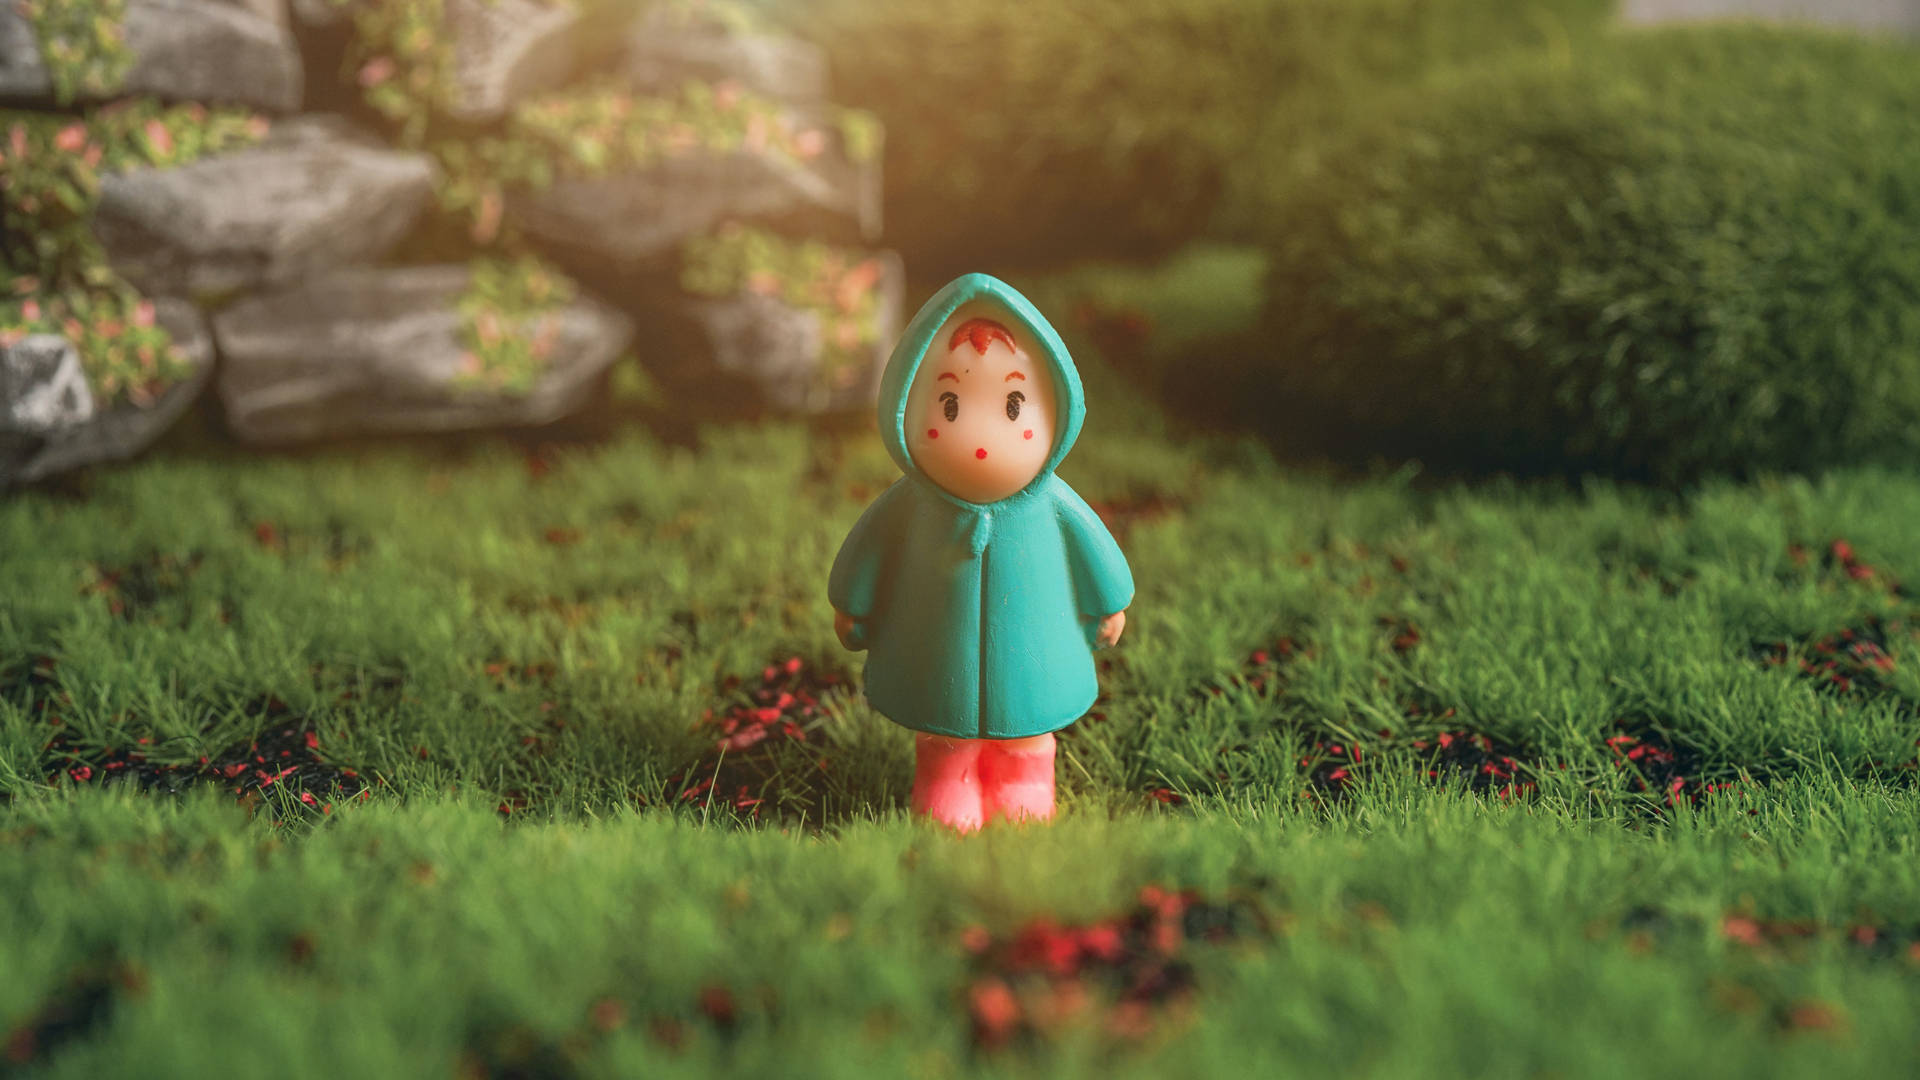 Child In Raincoat Animated Desktop